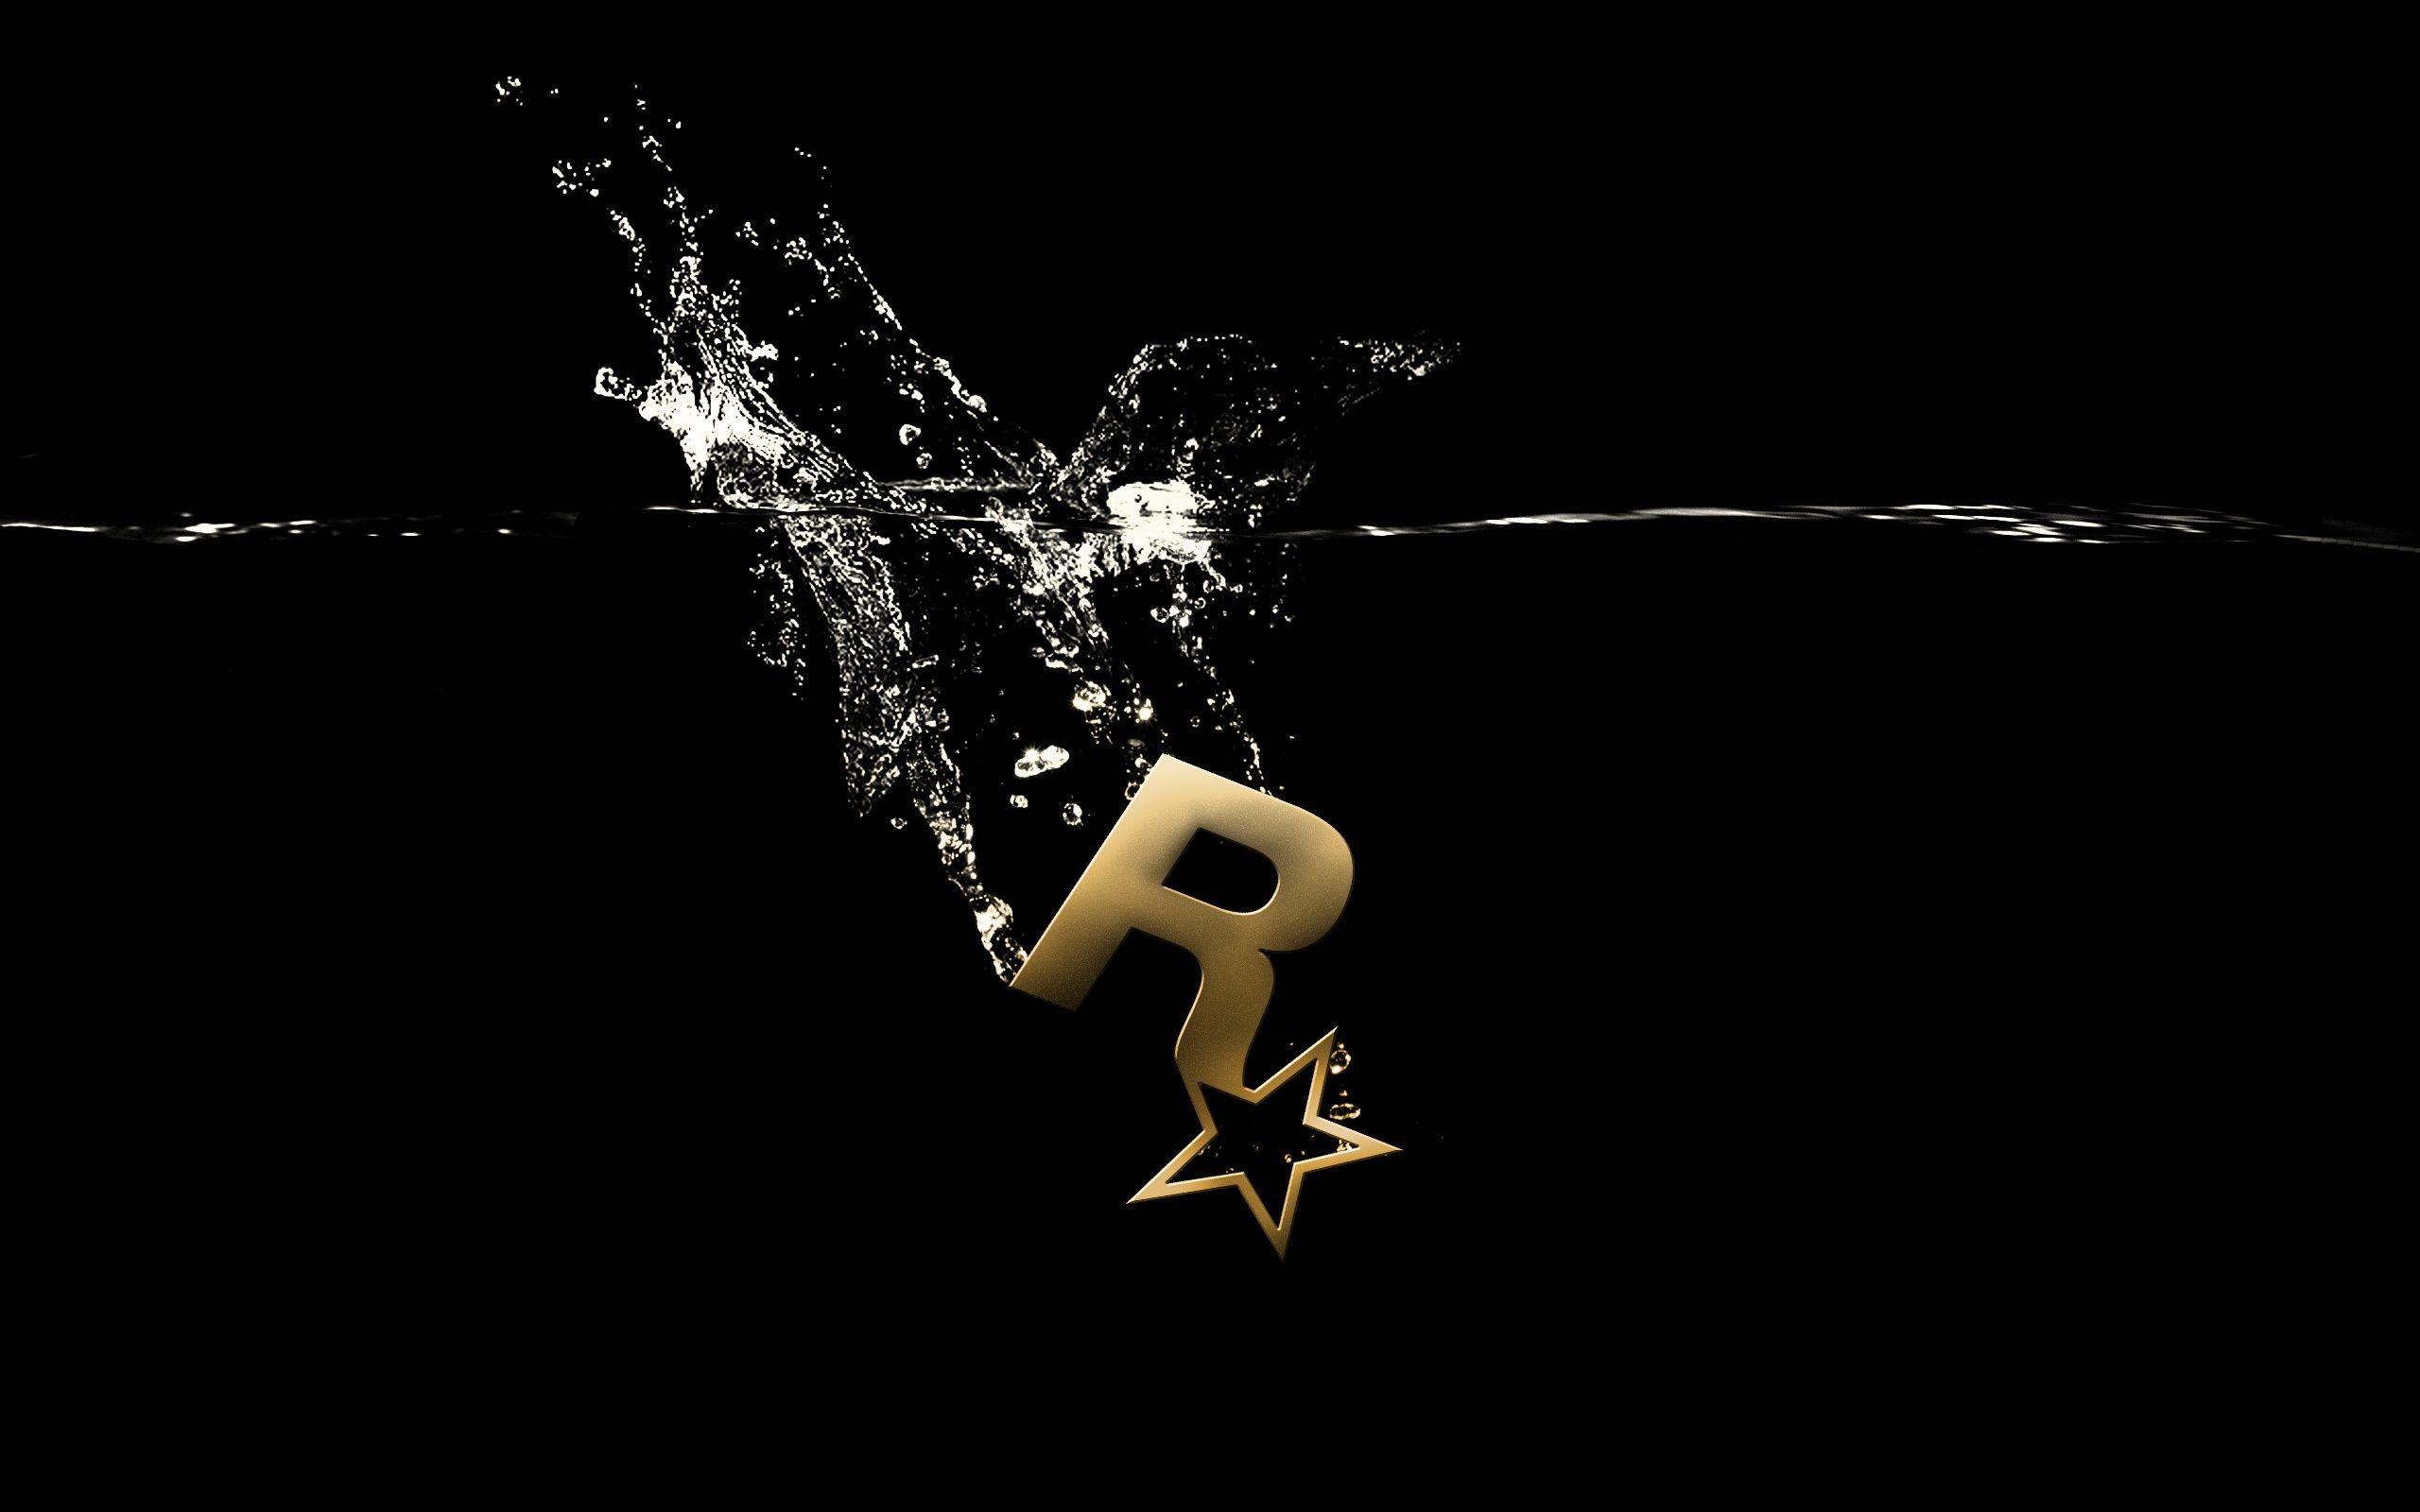 rockstar games logo hd